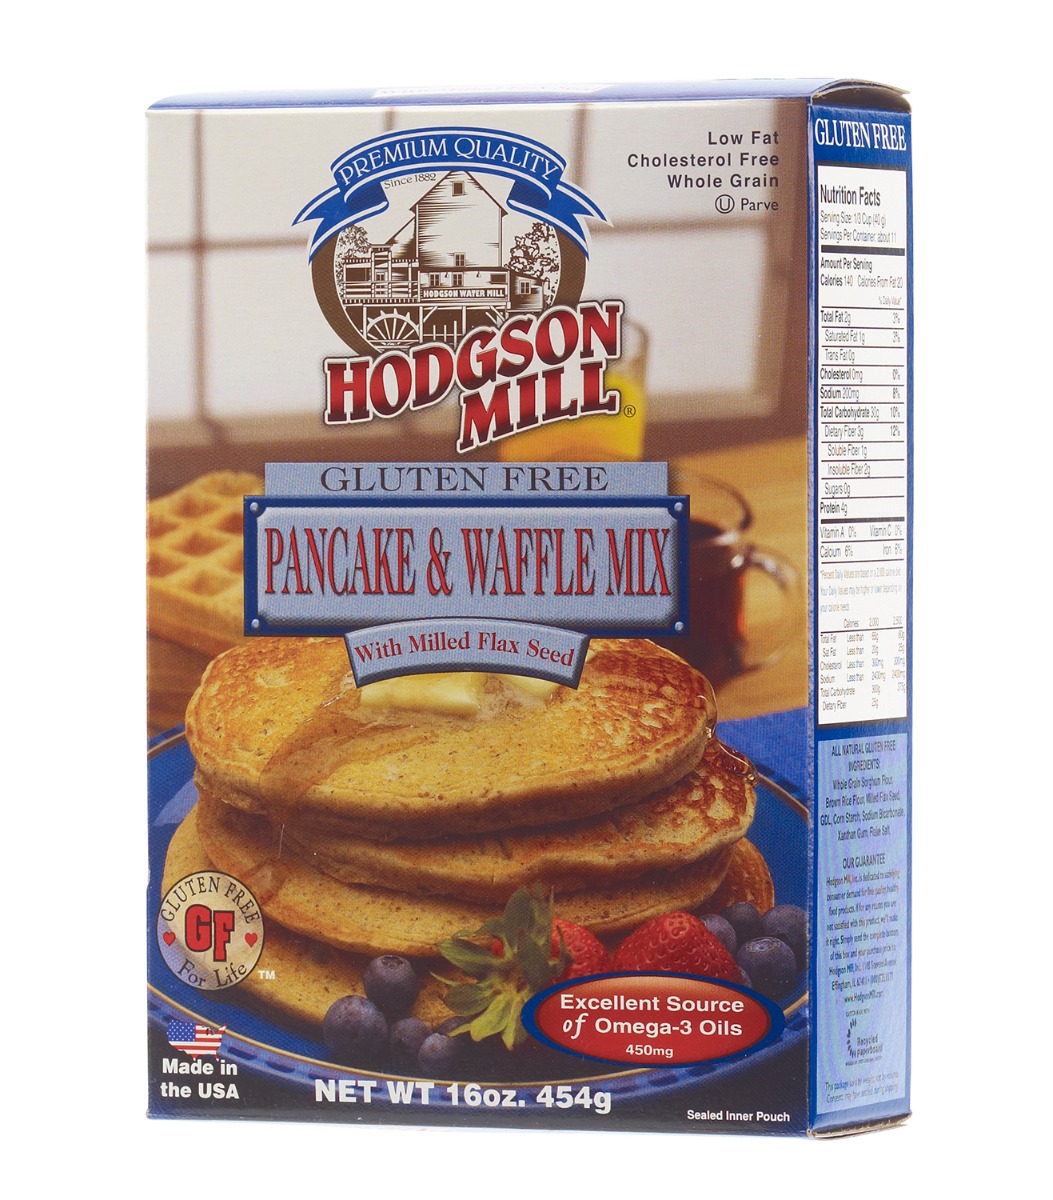 HODGSON MILL: Gluten Free Pancake & Waffle Mix with Flax Seed, 16 oz - 0071518021108